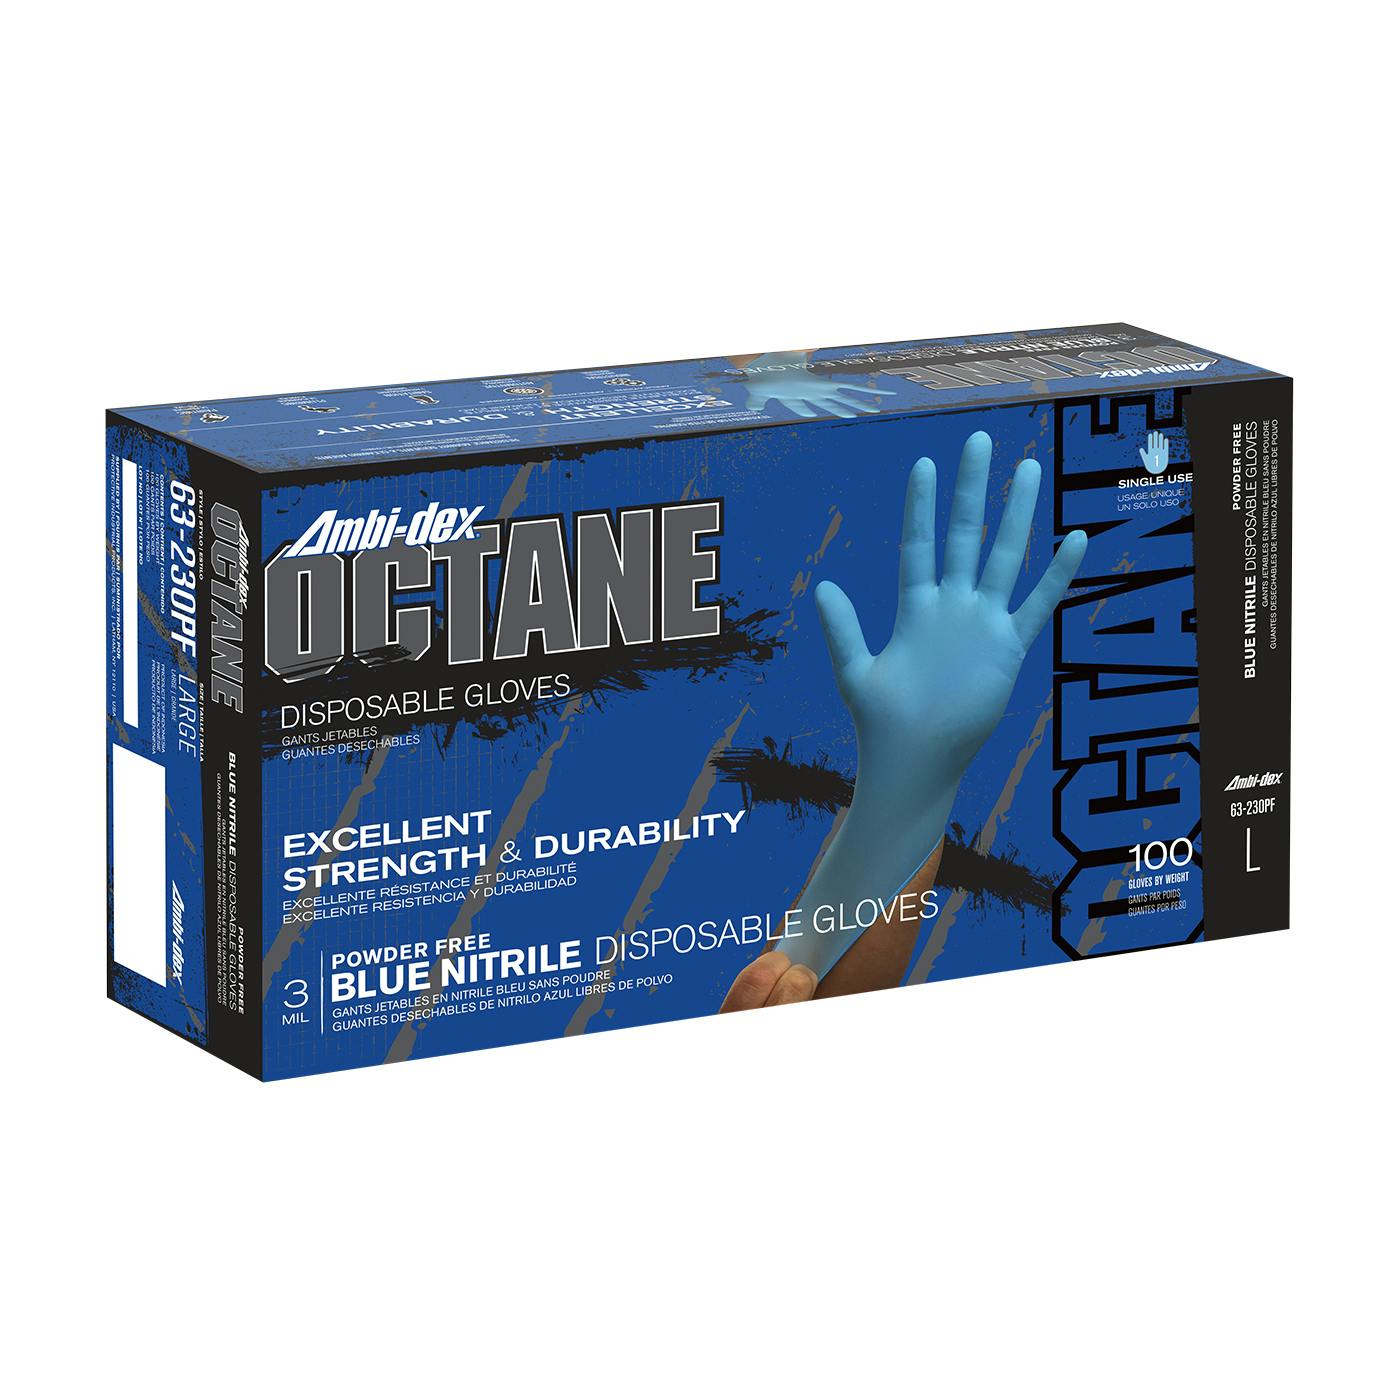 Ambi-dex® Octane Disposable Nitrile Glove, Powder Free with Textured Grip - 3 mil (63-230PF)_0